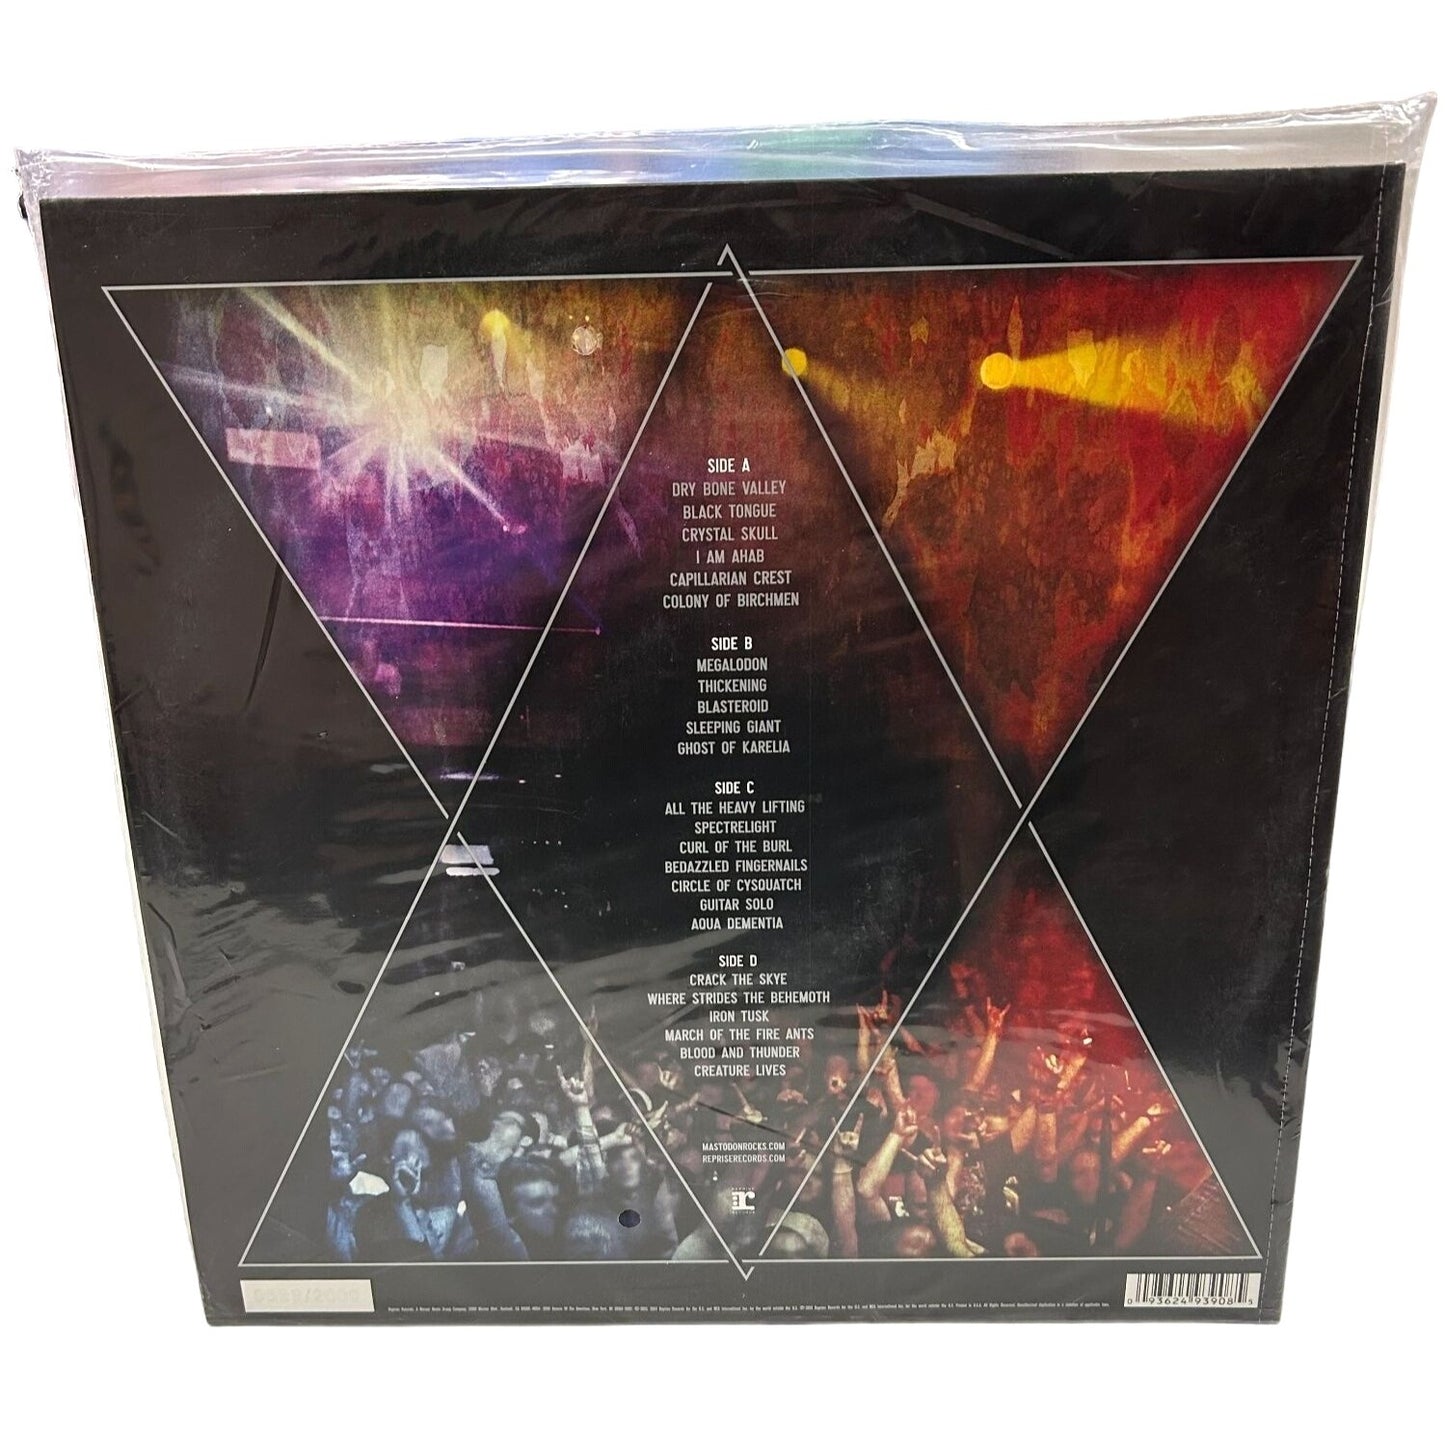 Mastodon – Live At Brixton (2014, Reprise Records 541585-1) Limited Edition